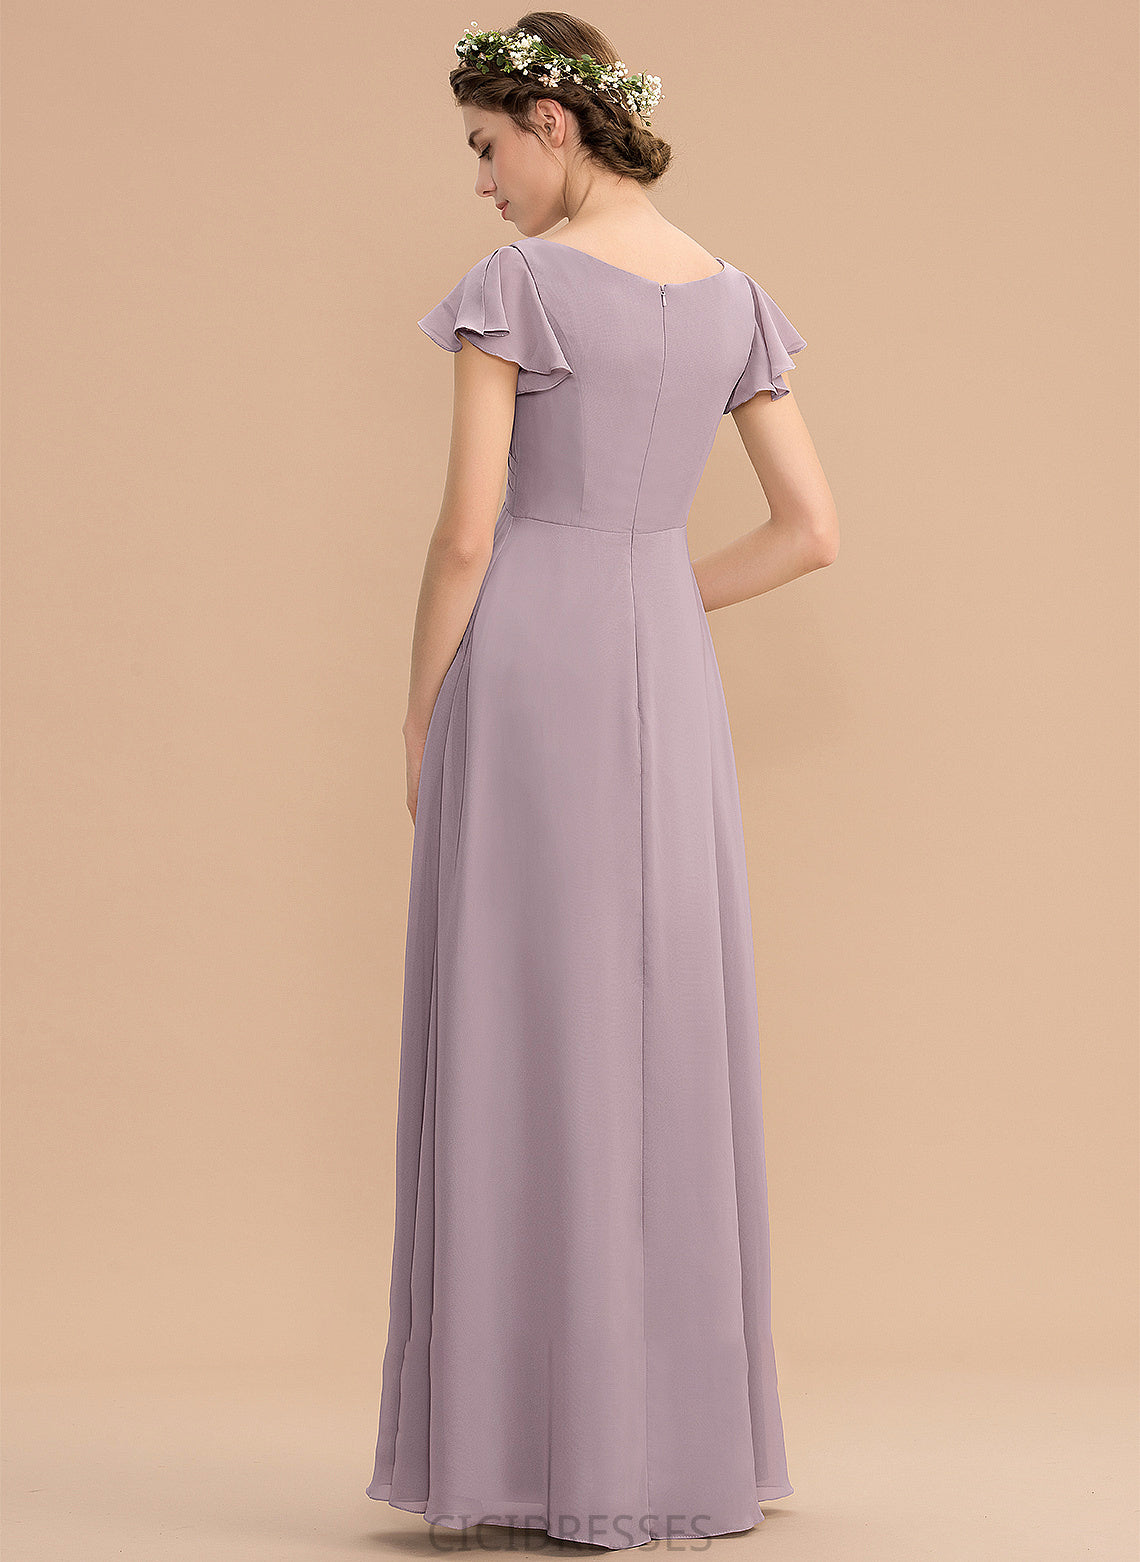 Embellishment Fabric Silhouette Pockets Floor-Length Length CascadingRuffles A-Line V-neck Neckline Chelsea Sleeveless Bridesmaid Dresses